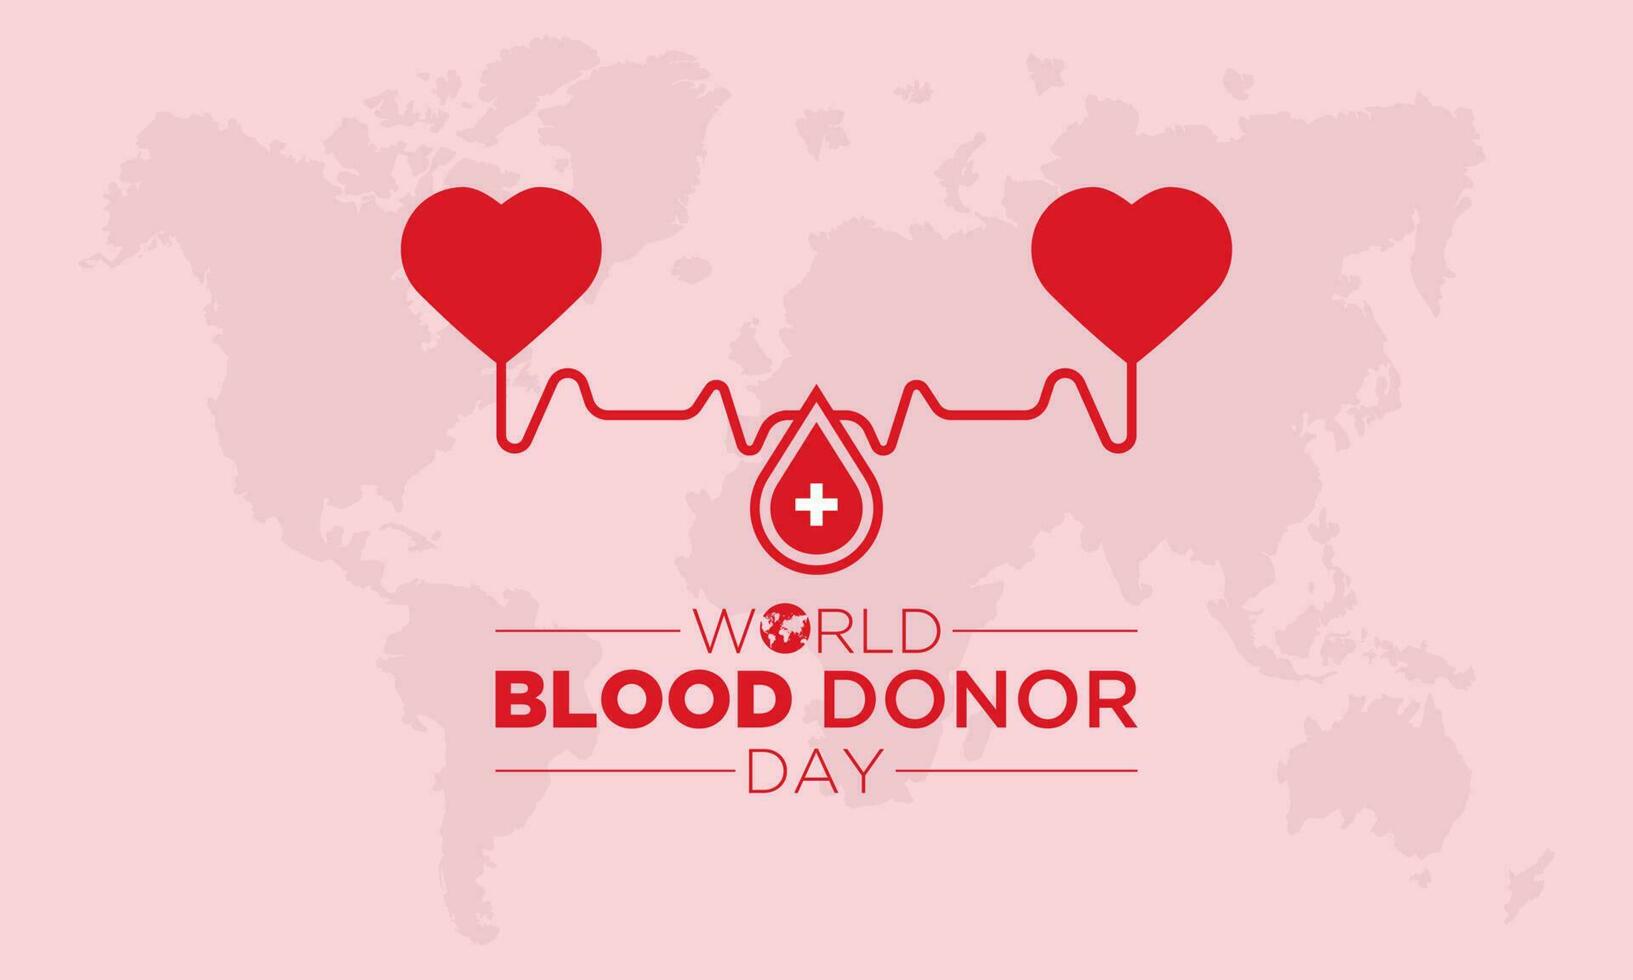 mundo sangre donante día es observado cada año en junio 14 donar sangre concepto ilustración antecedentes para mundo sangre donante día. vector ilustración.